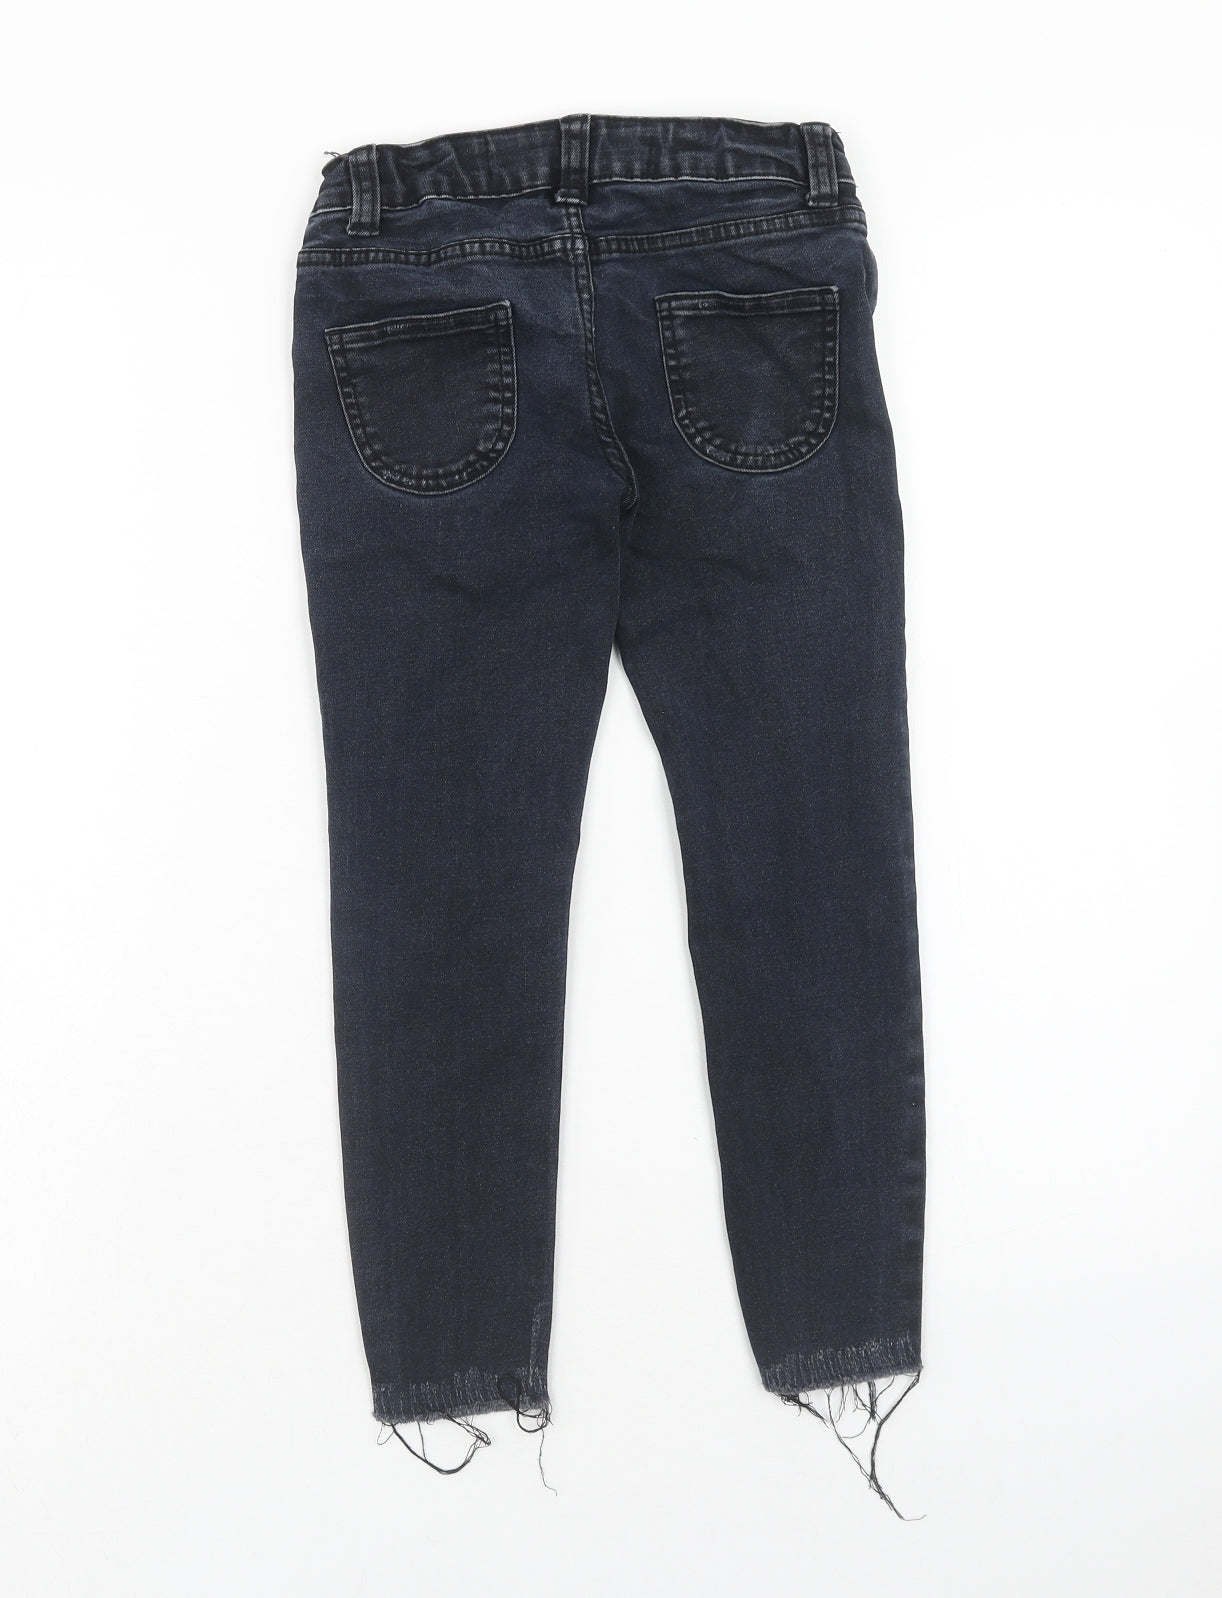 Denim & Co. Boys Blue Cotton Skinny Jeans Size 7-8 Years Regular Zip - Distressed